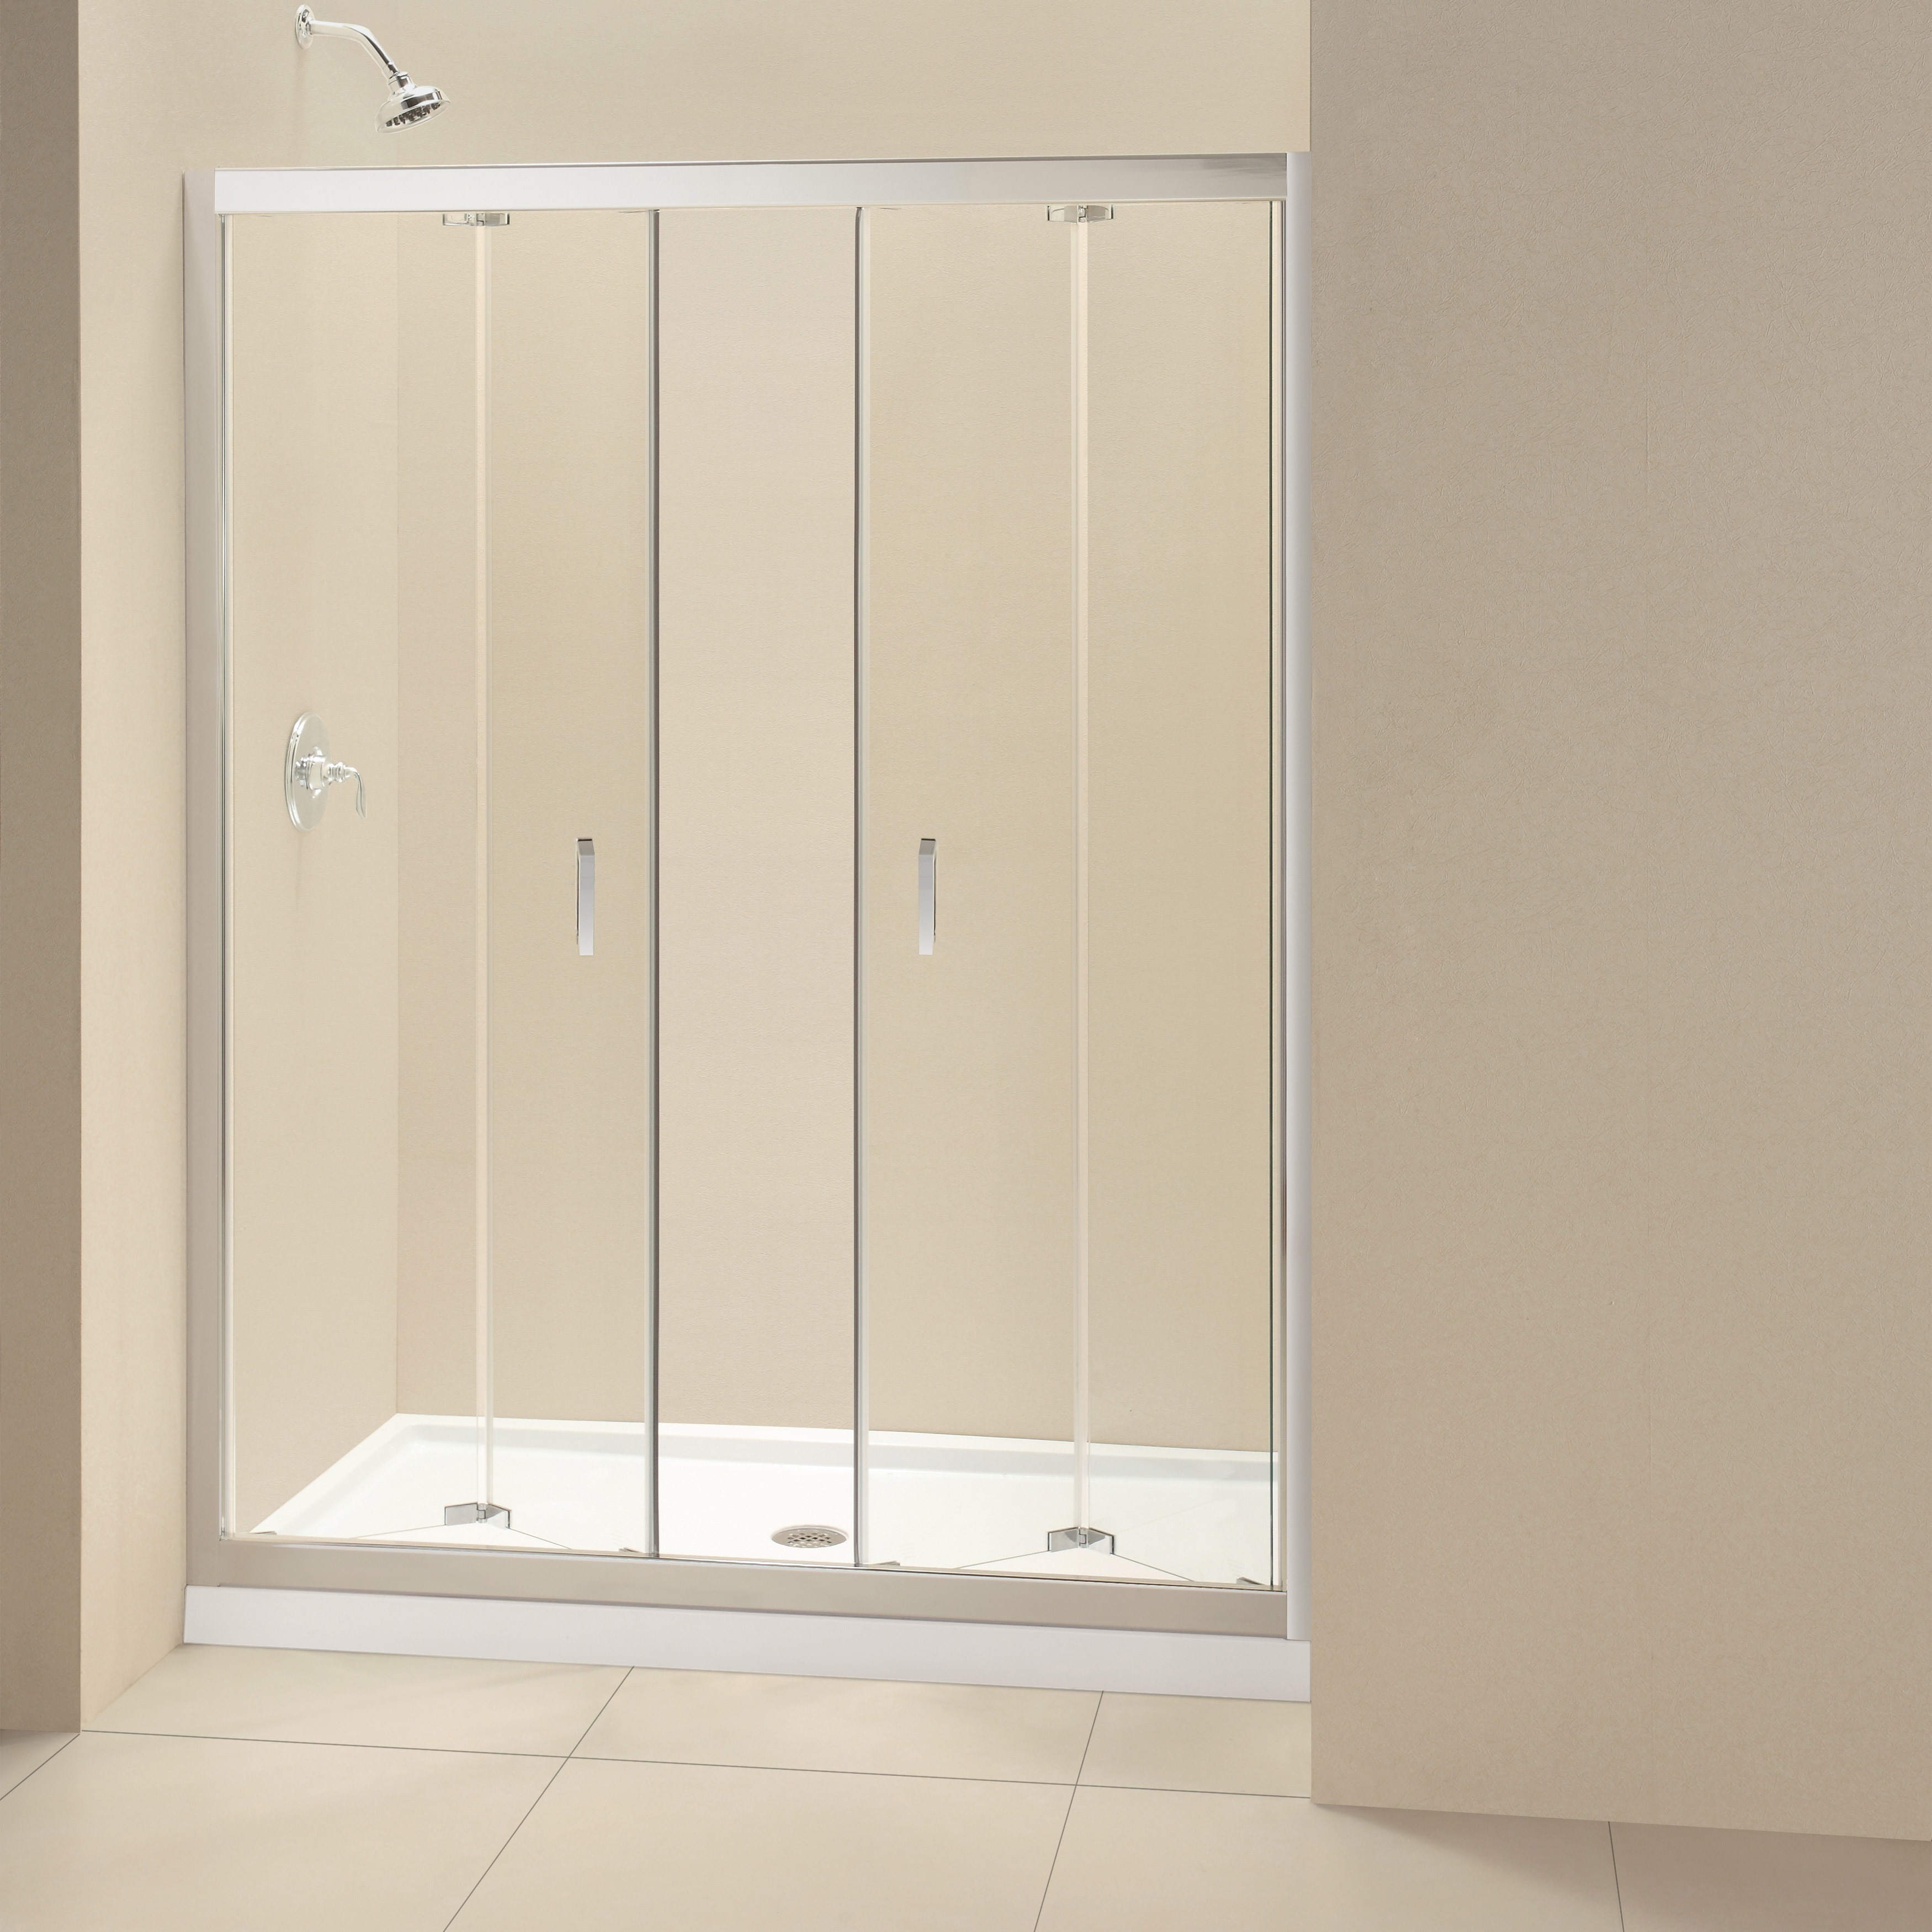 Dreamline Butterfly Bi fold Shower Door And 36x60 inch Shower Base